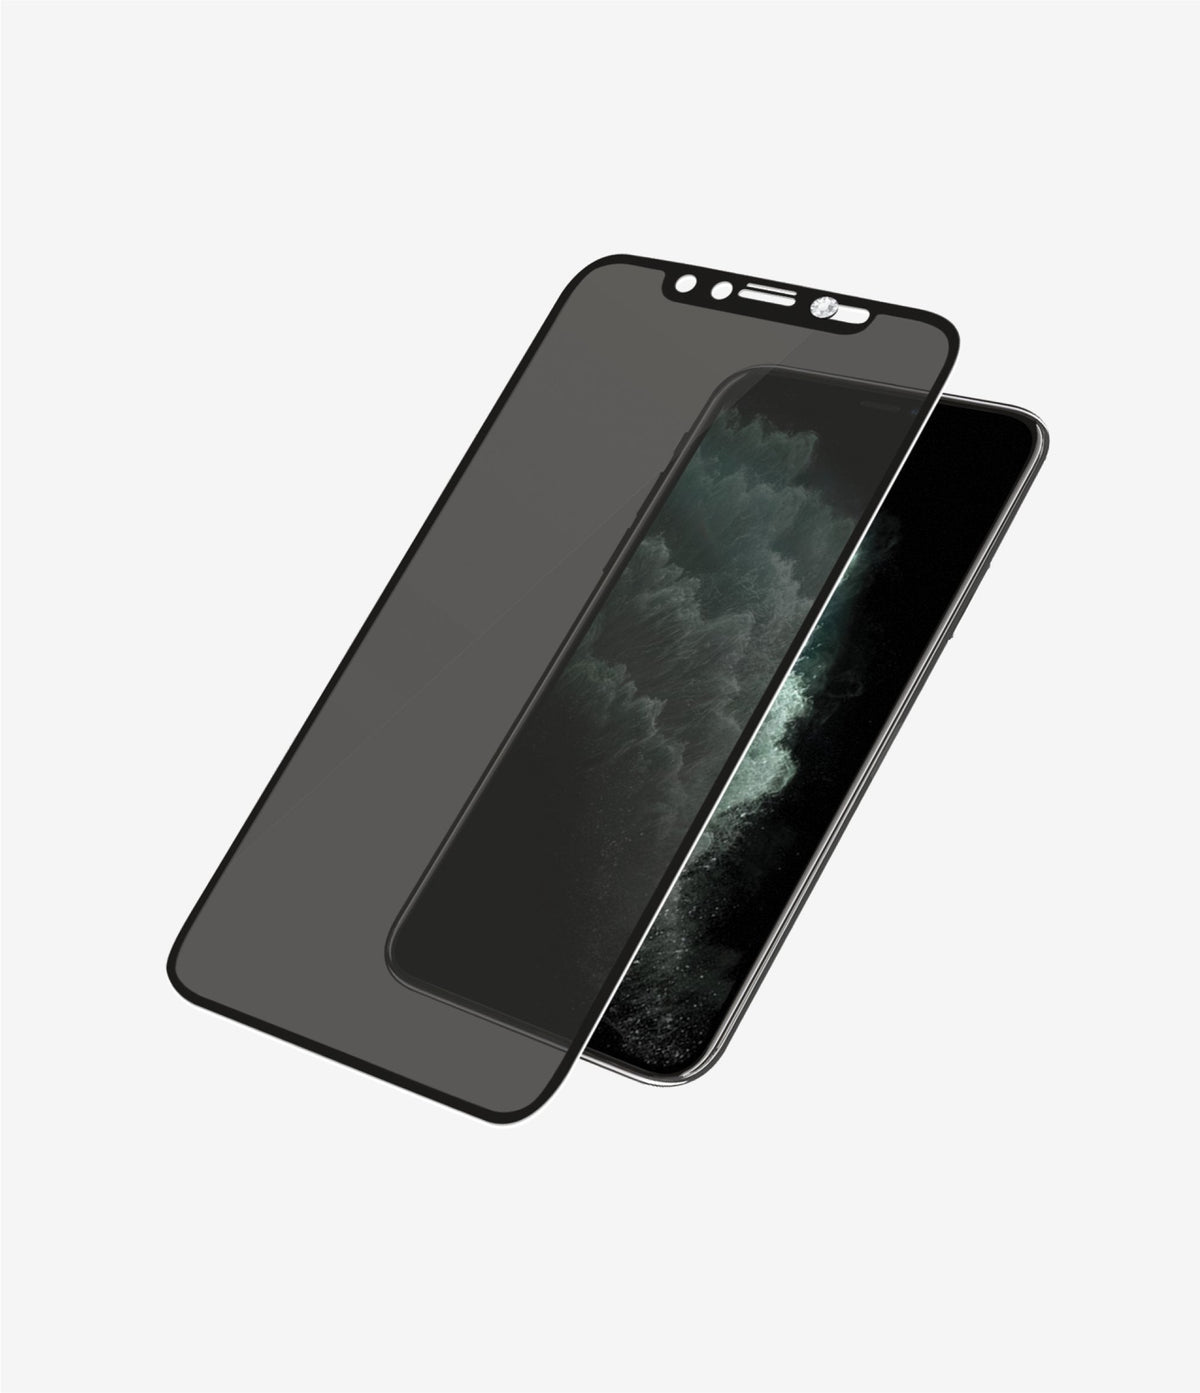 [OPEN BOX] PANZERGLASS Swarovski CamSlider Privacy Screen Protector for iPhone 11 Pro Max - Black